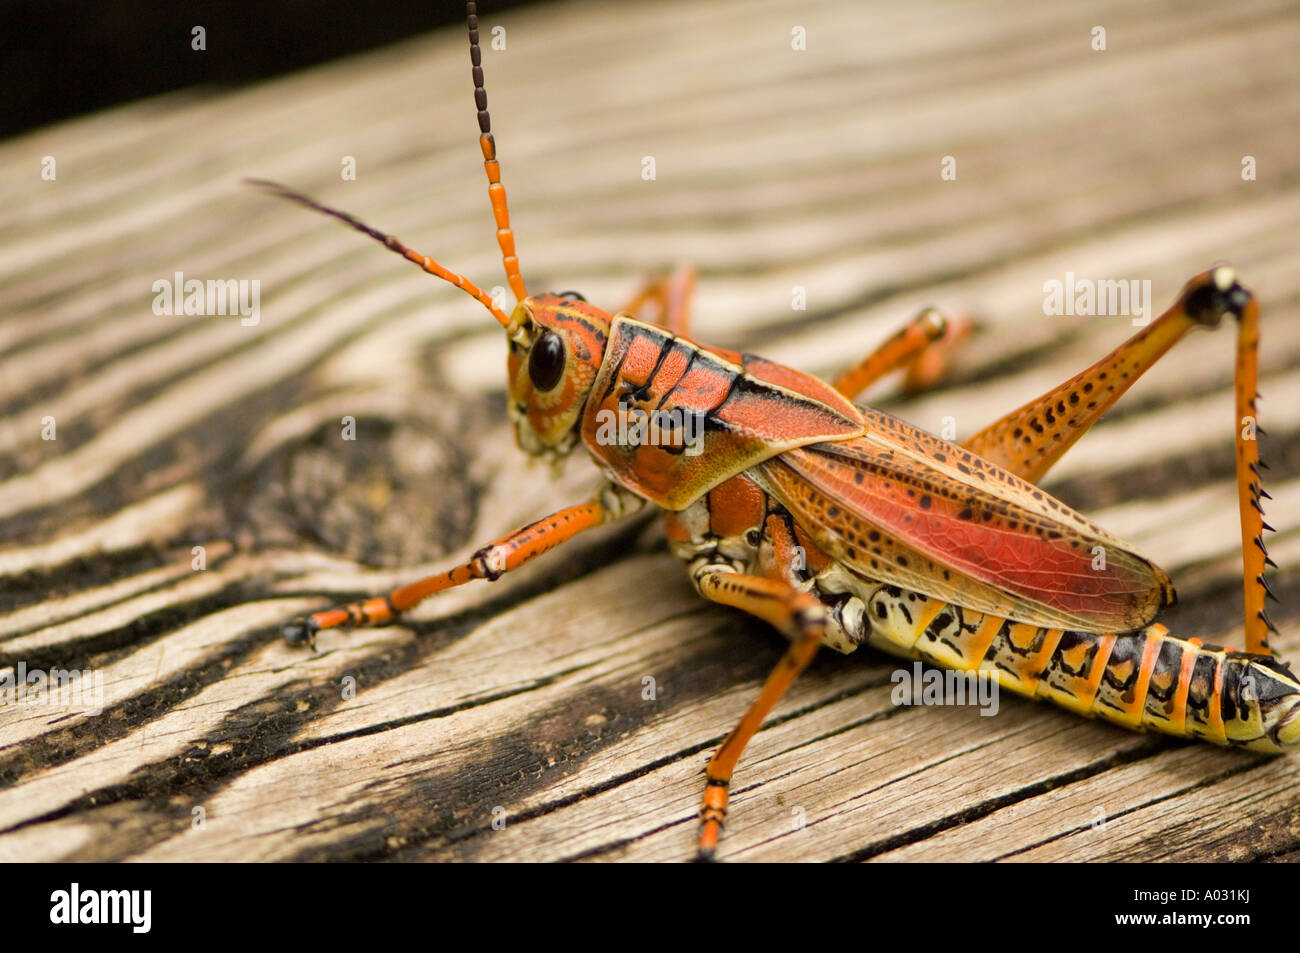 Lubber grasshopper on a boardwalk in the Florida Everglades, USA. Stock Photo